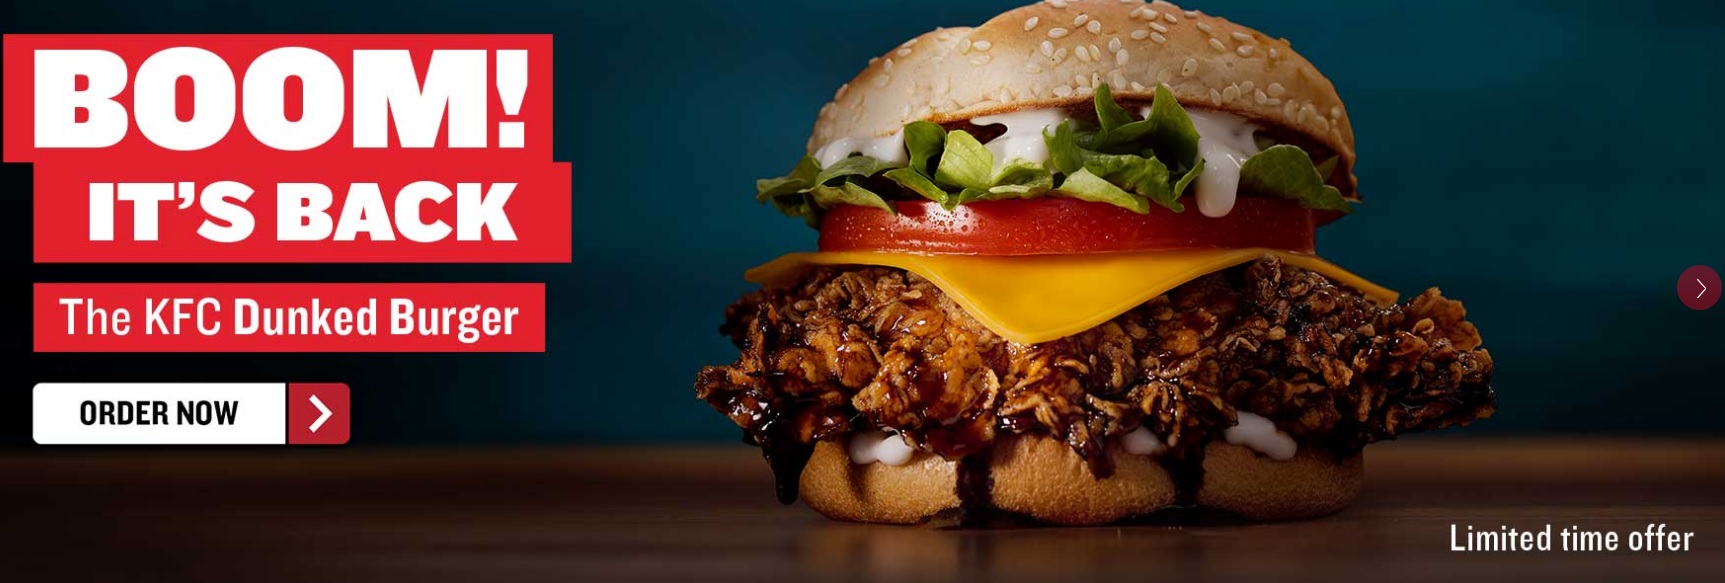 KFC South Africa - Dunked Burger